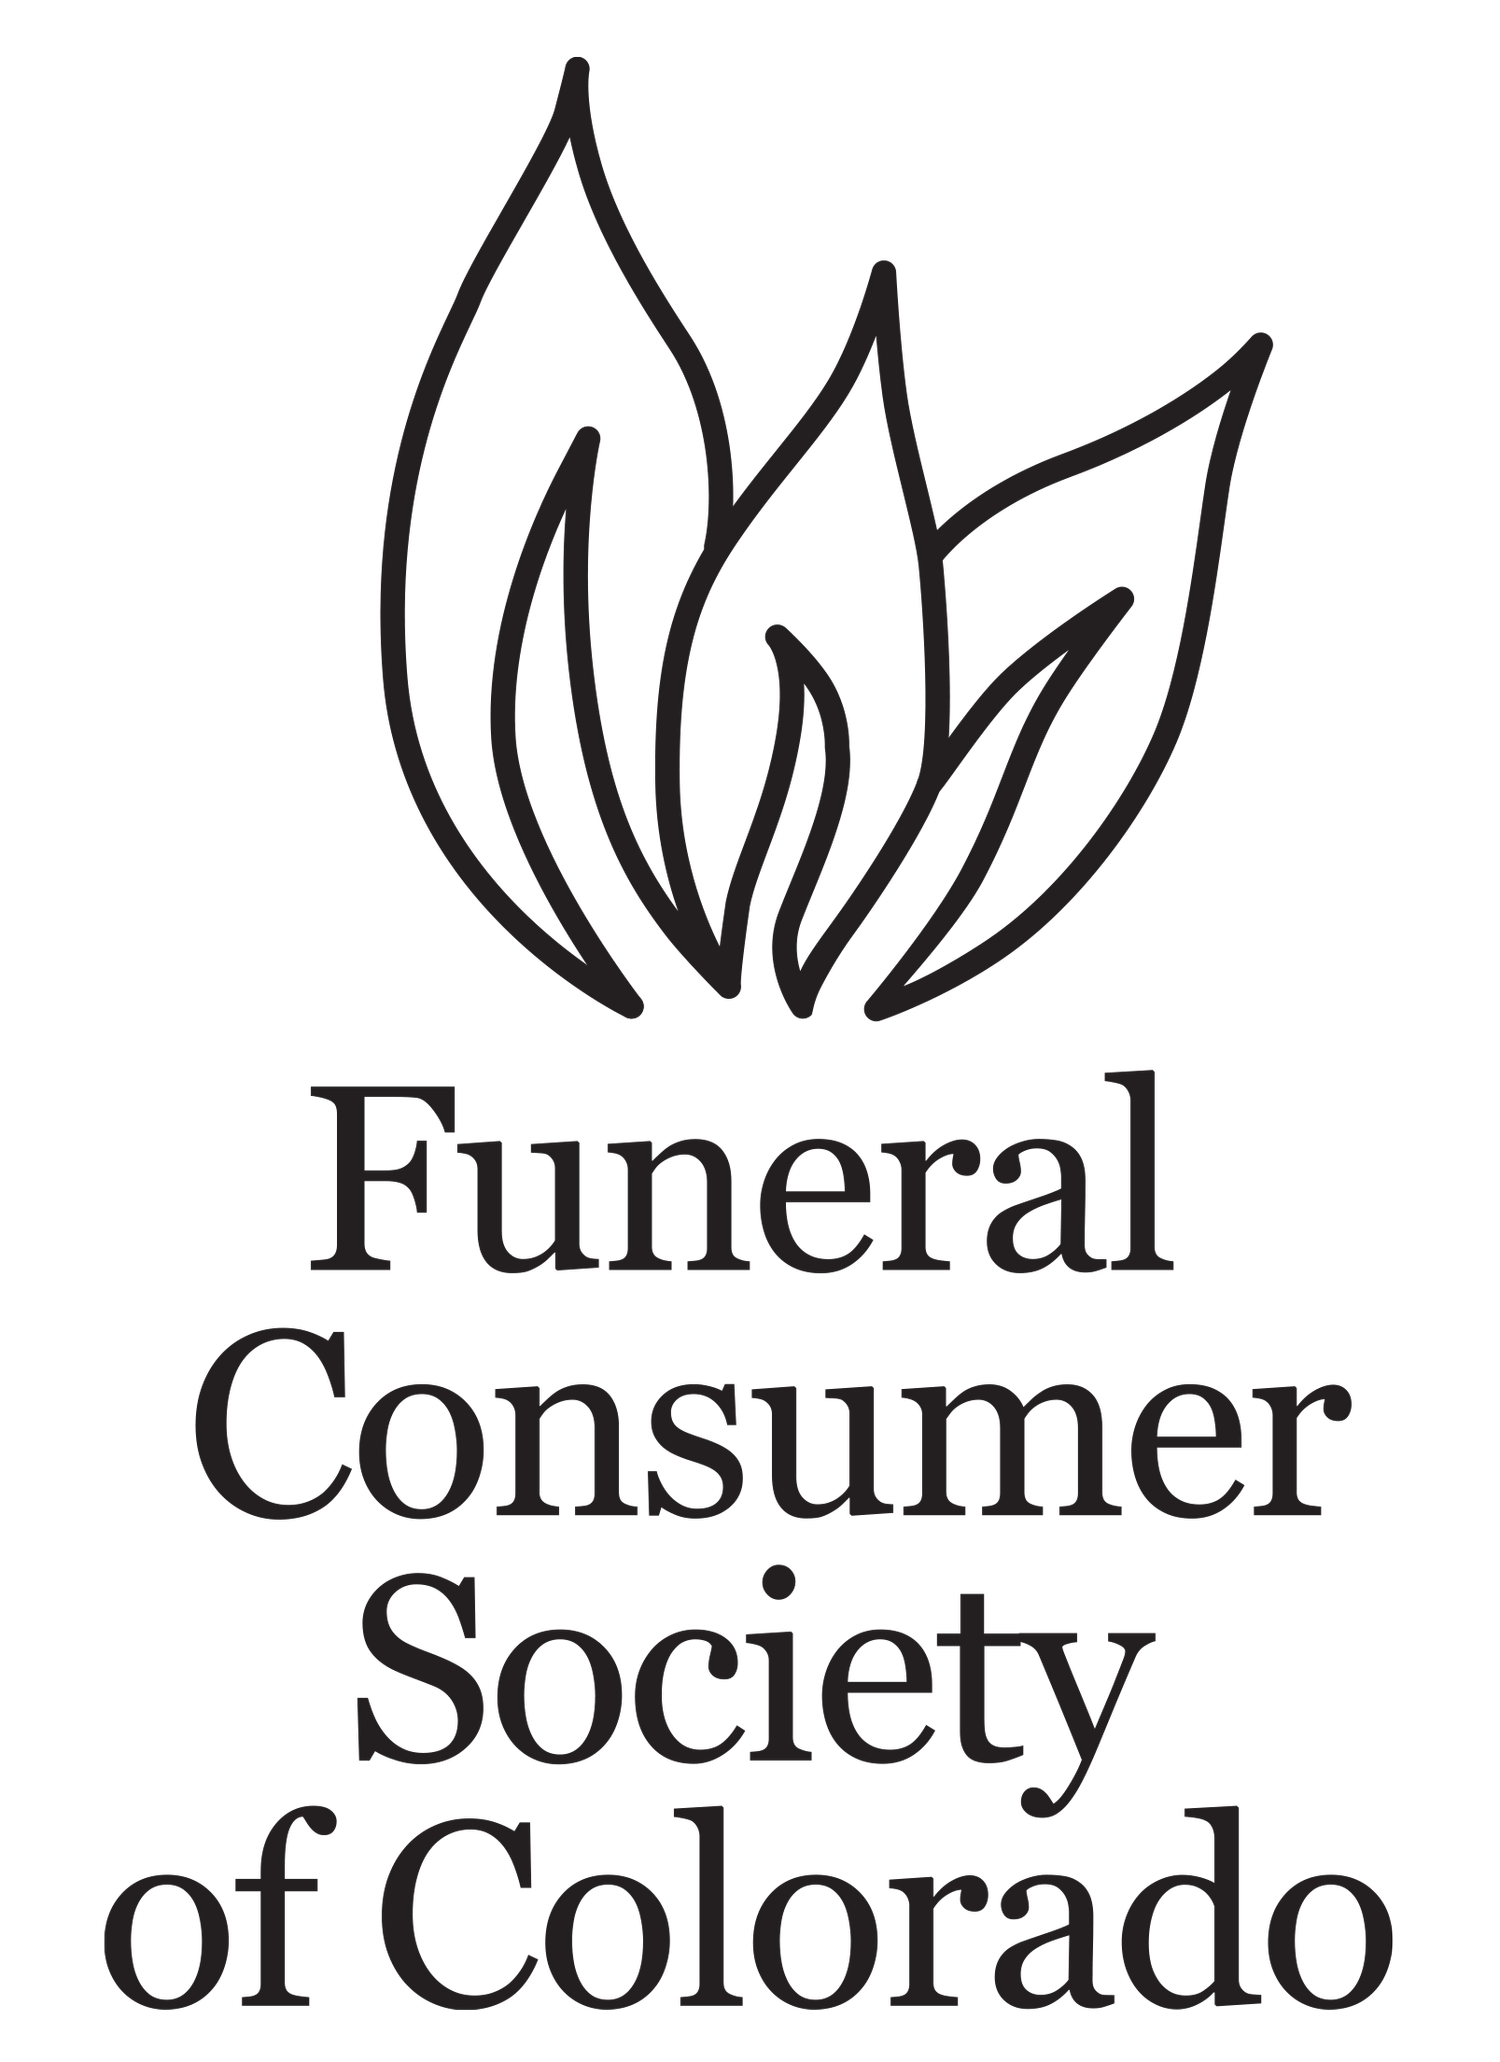 Funeral Consumer Society of Colorado